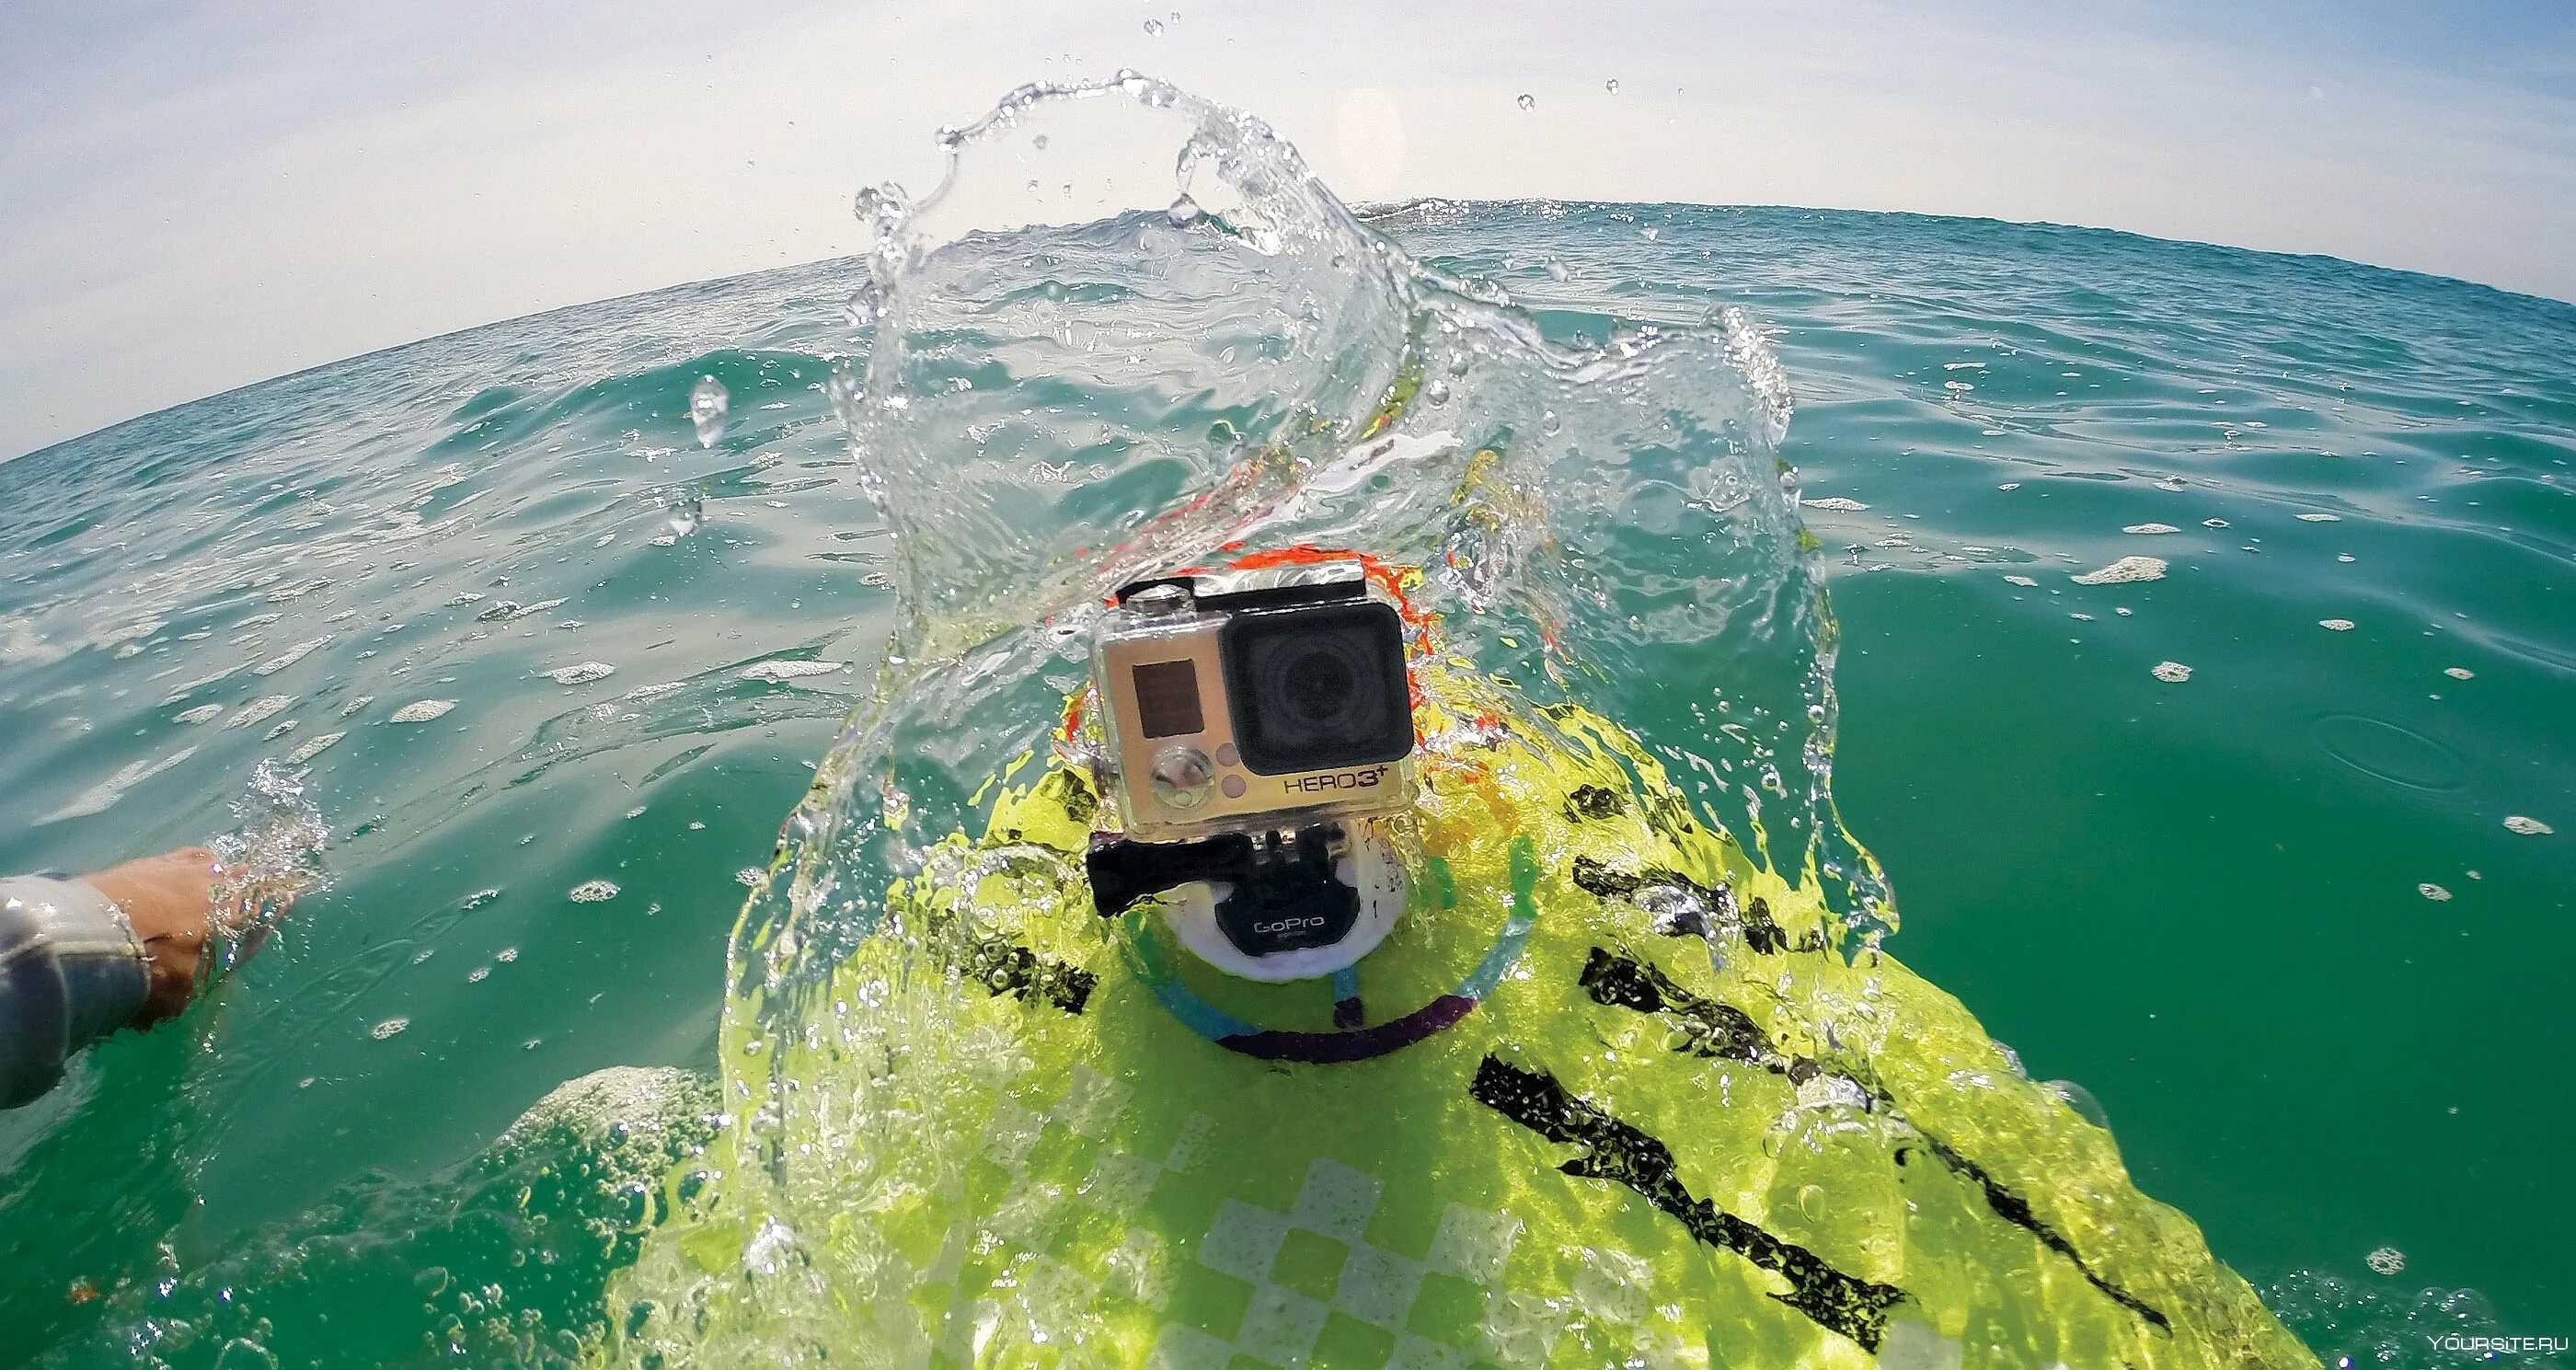 GOPRO крепление на штанге ABBRD-001 (Bodyboard Mount). Экшн камера GOPRO 8. Экшн камера Сигма. Камера гоу про под водой. Го про в воде